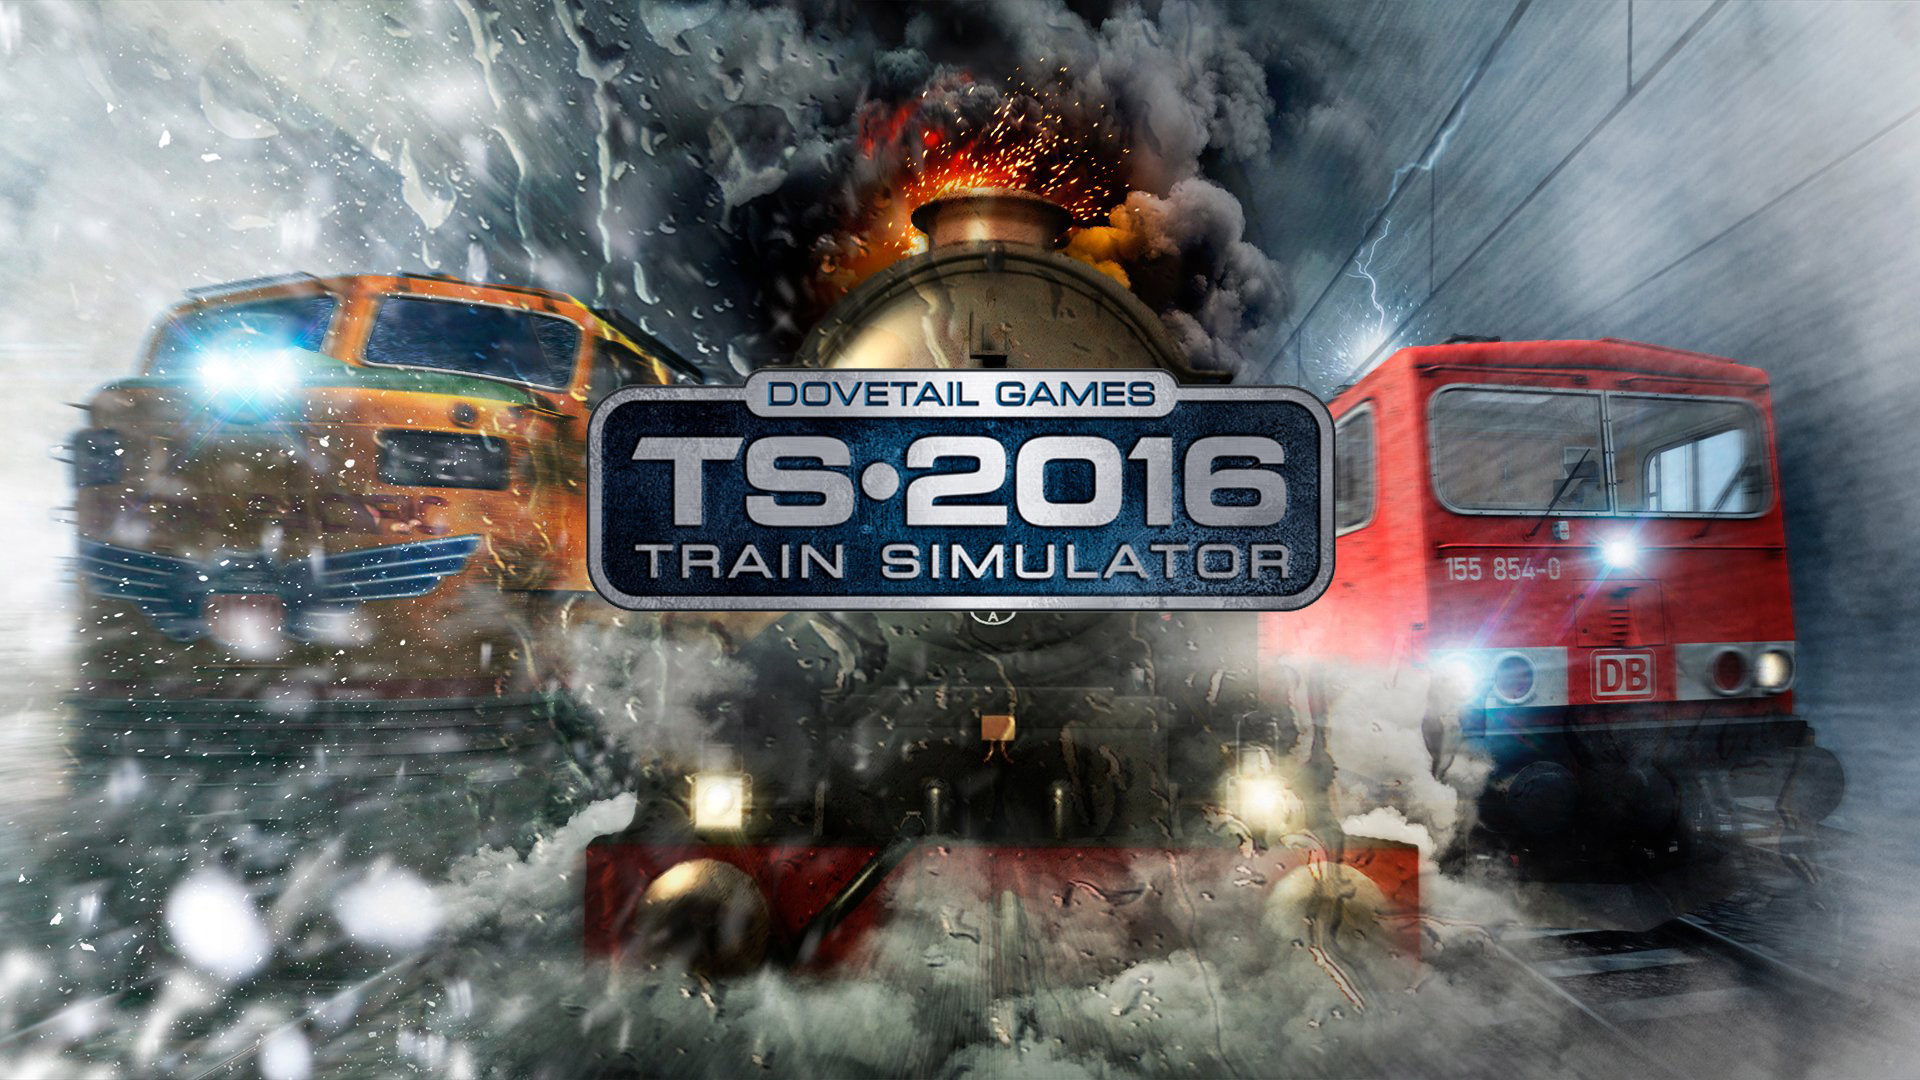 Train simulator pc download free